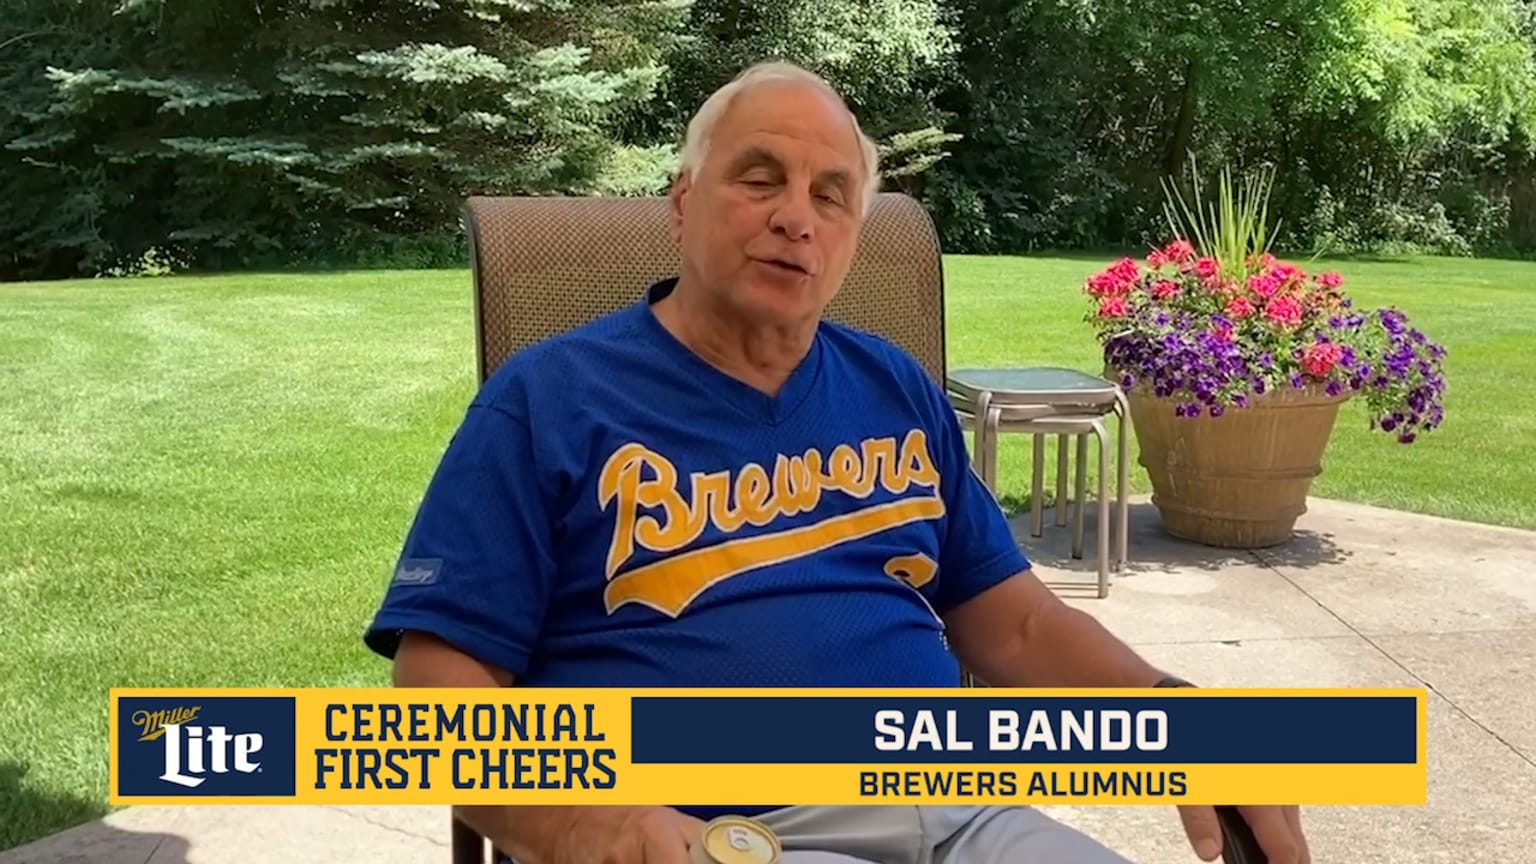 First Cheers: Sal Bando, 08/11/2020